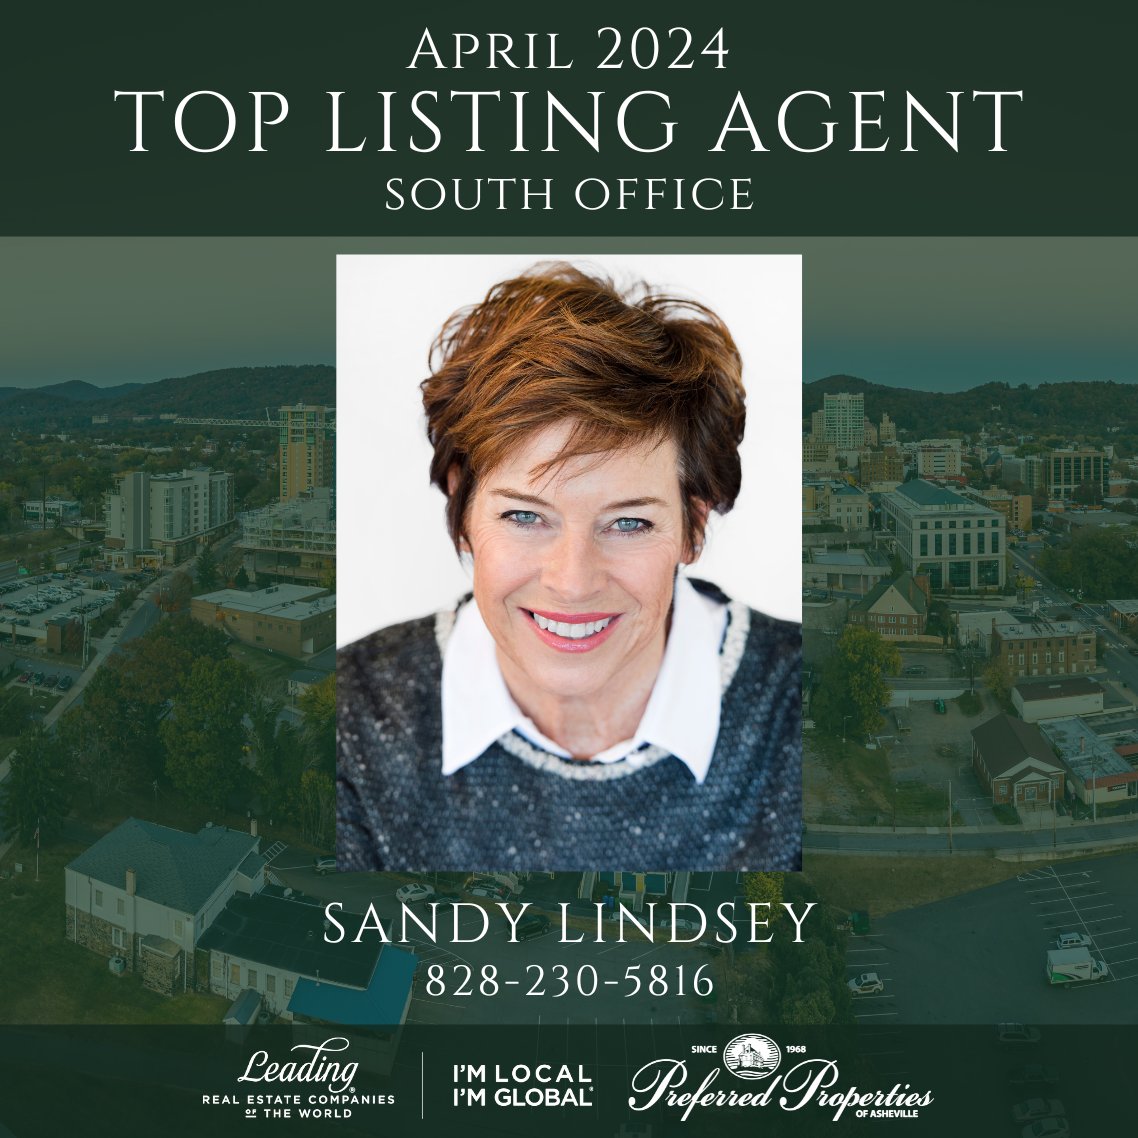 Sandy Lindsey
Agent/REALTOR®
828-230-5816
sandy@preferredprop.com
preferredprop.com
#ashevillerealestateagent
#ashevillenc
#asheville
#ashevillerealty
#ashevillehousing